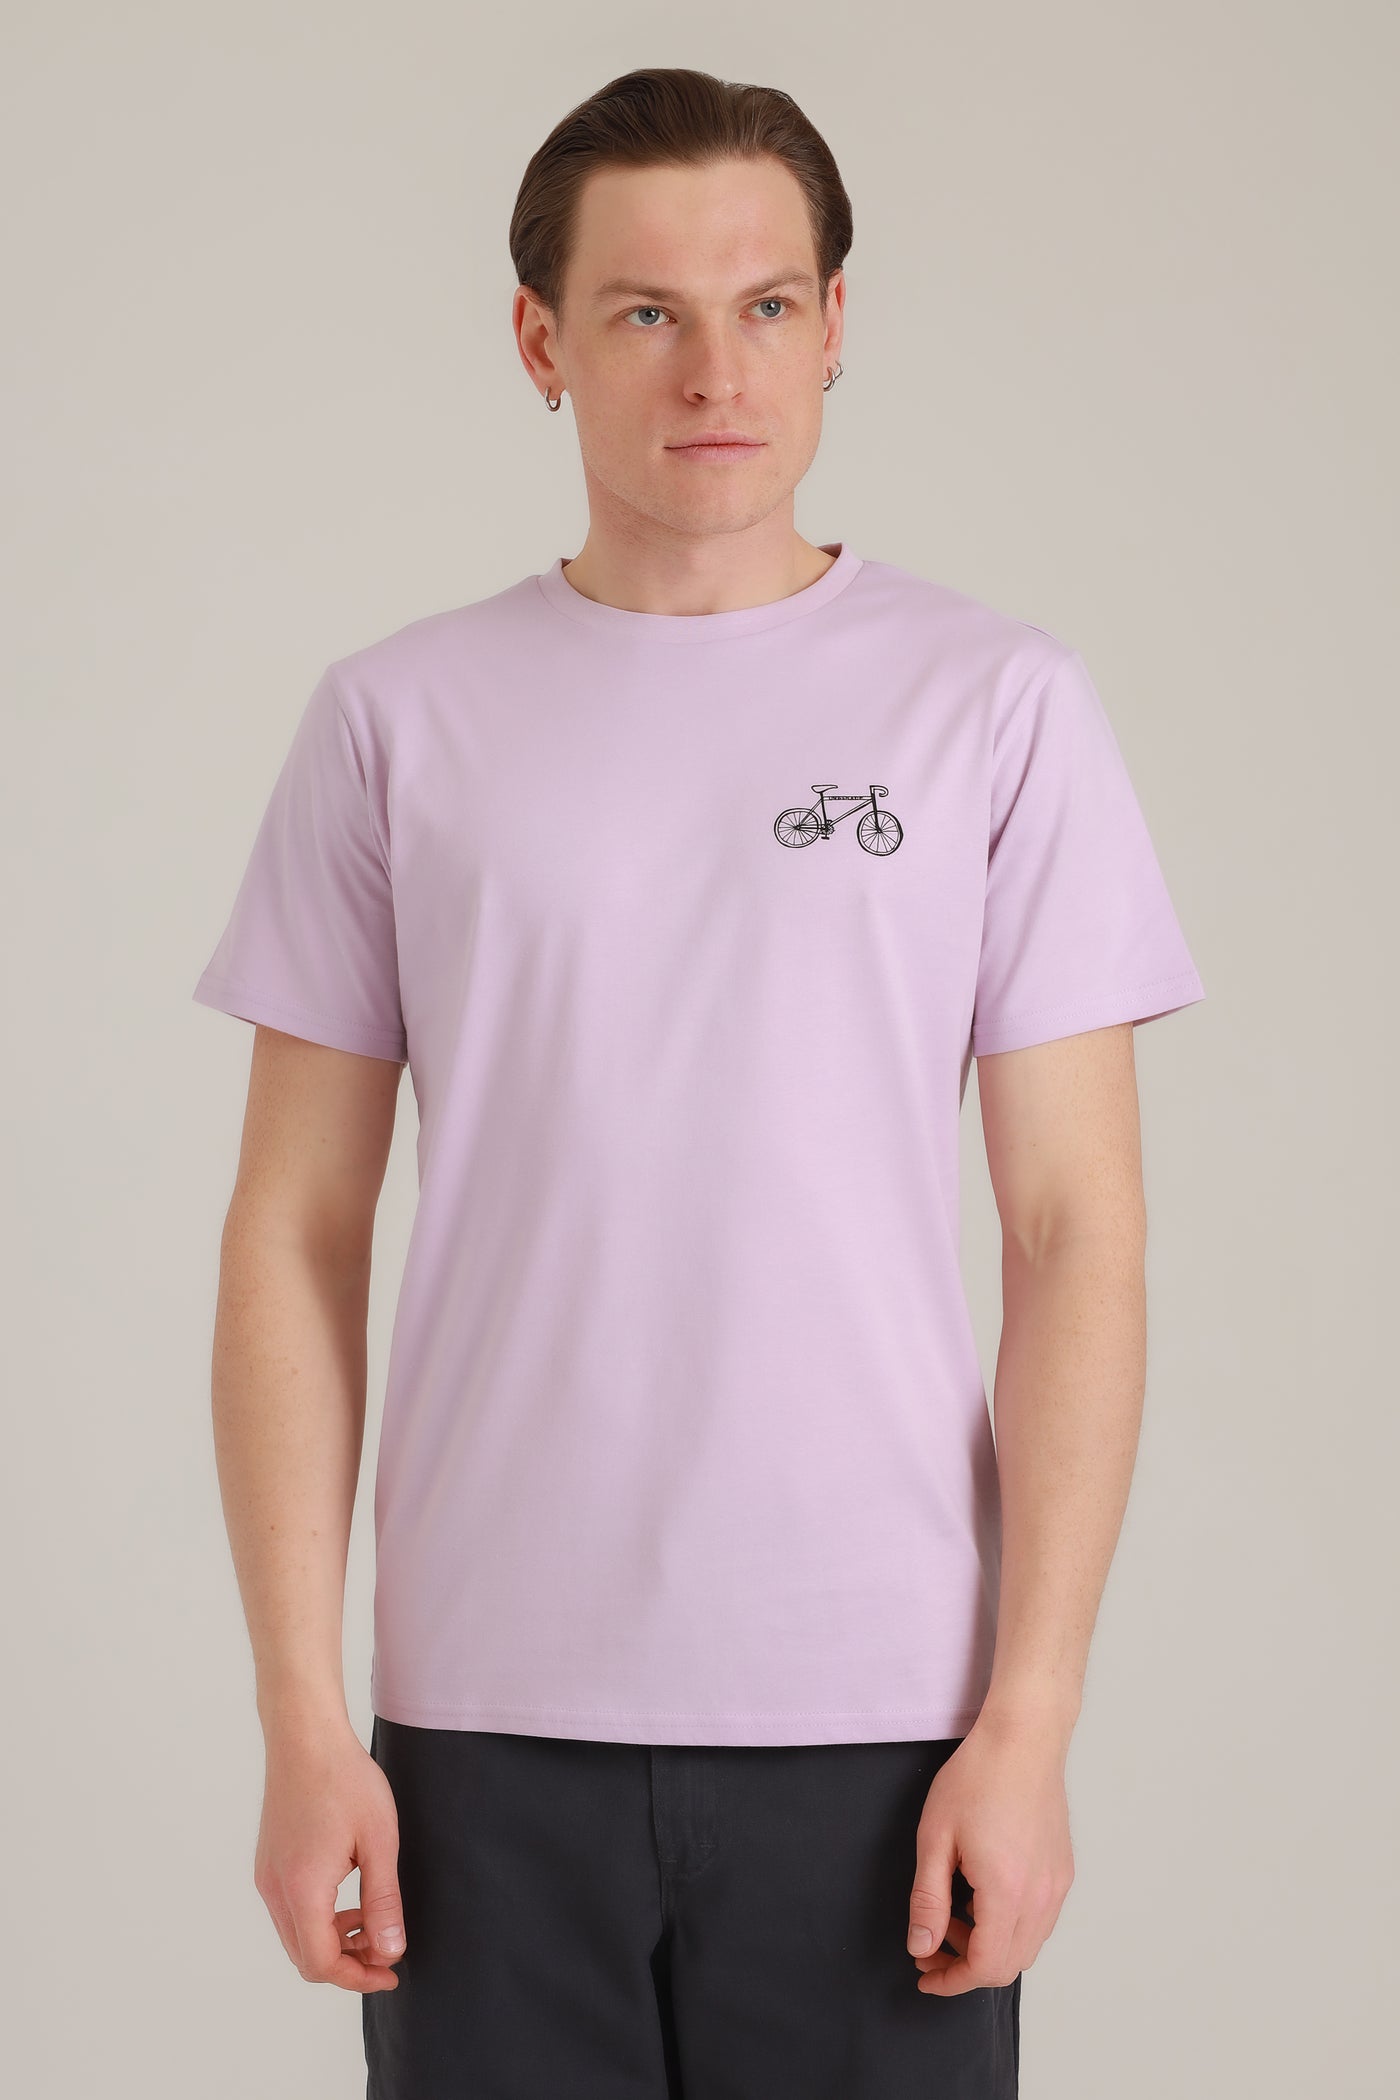 T-Shirt Men Bike Lavender